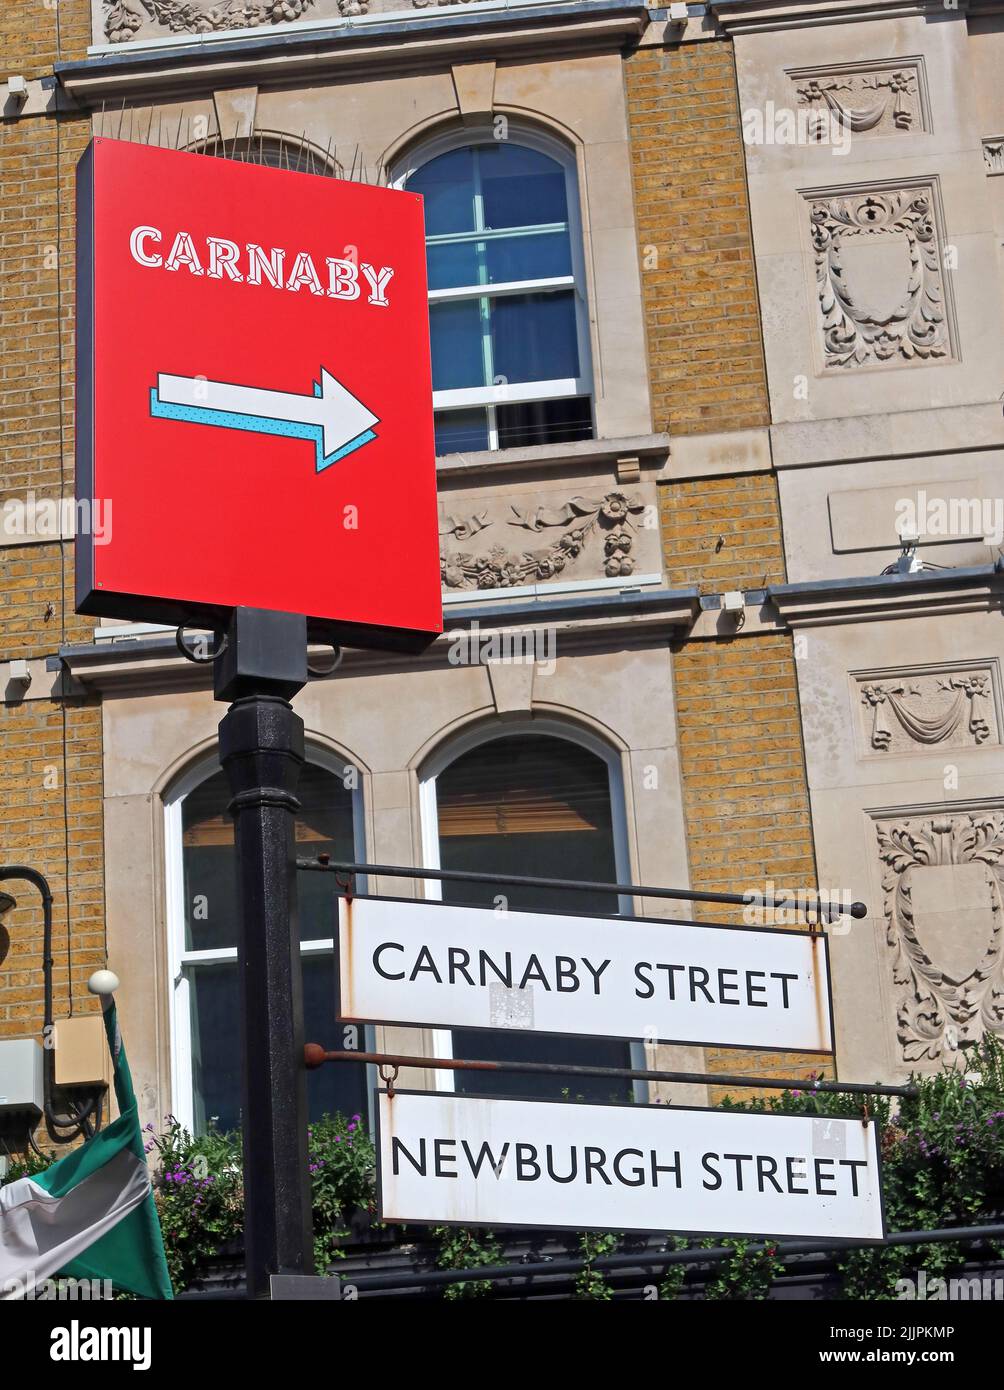 Carnaby hier entlang, Carnaby Street und Newburgh Street in Soho, London, England, UK, W1F 9PF Stockfoto